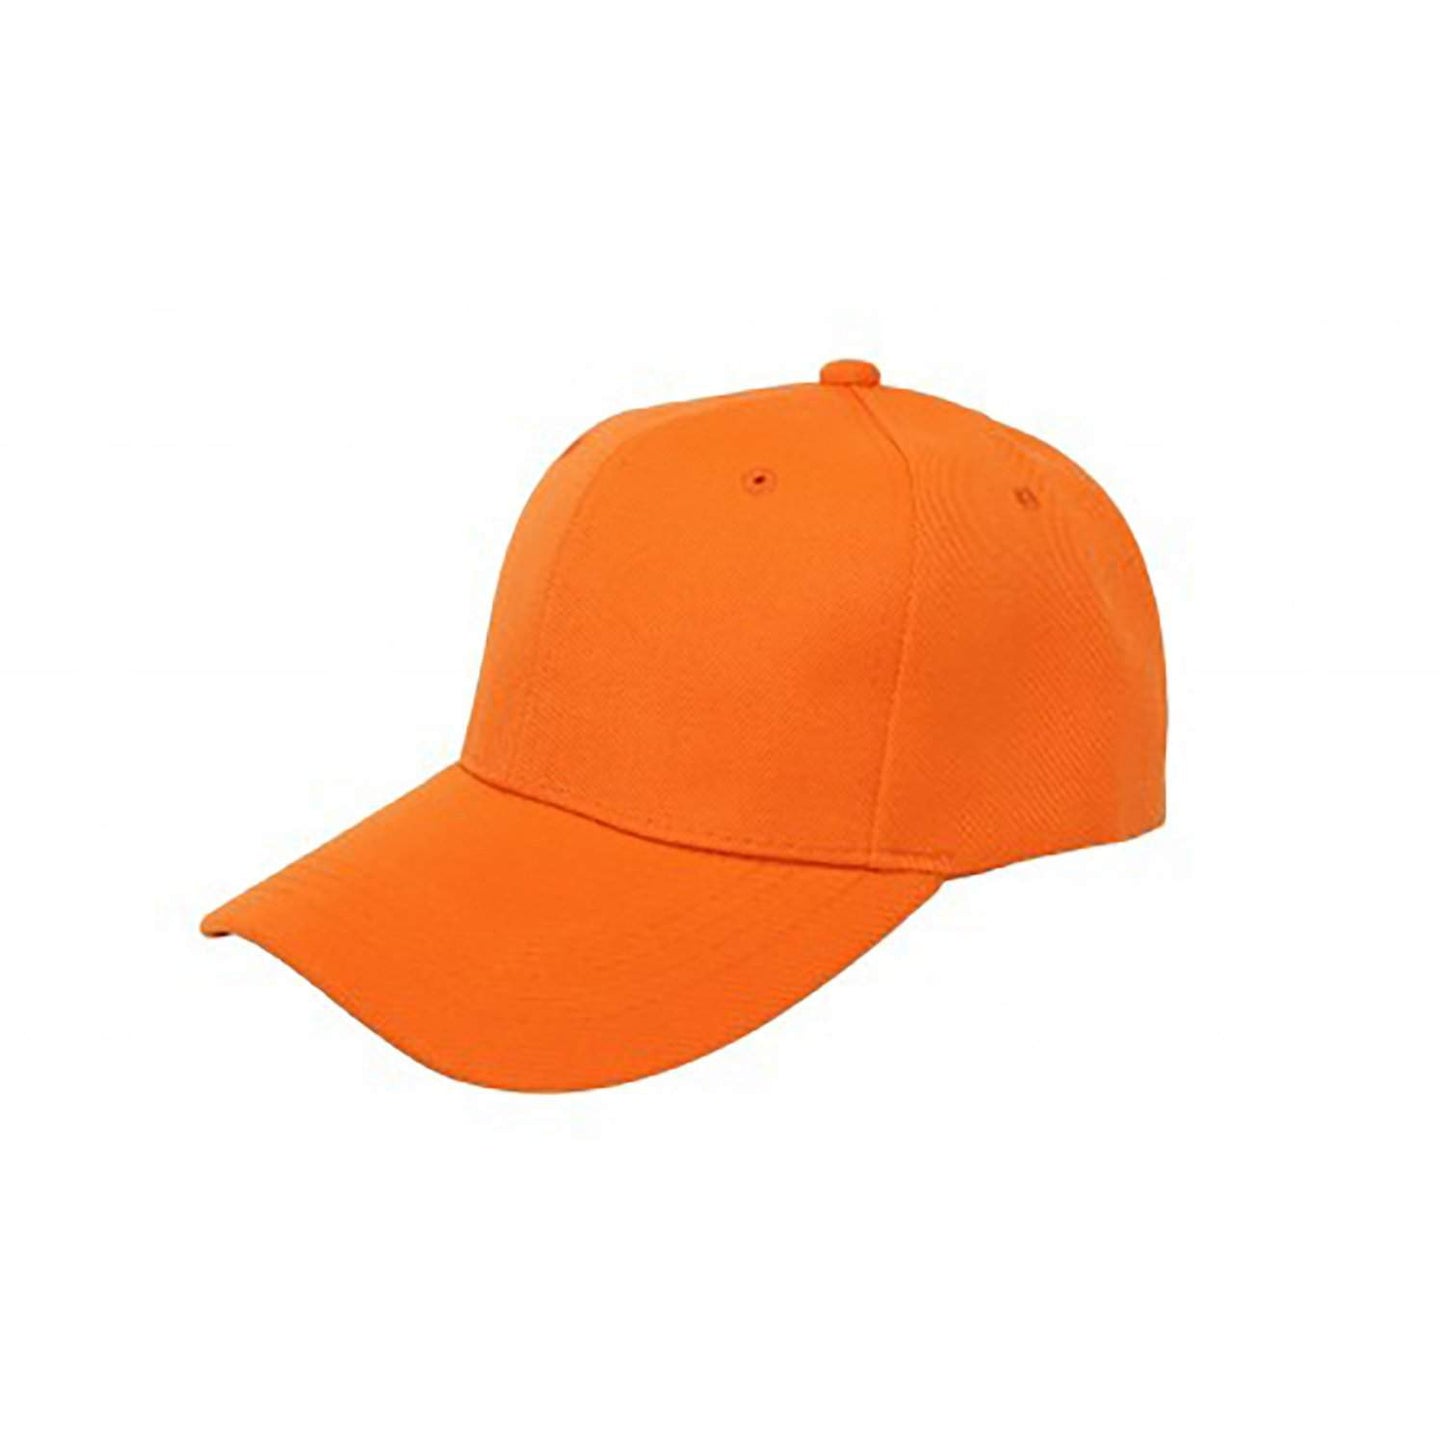 Pack of 5 Mechaly Plain Baseball Cap Hat Adjustable Back